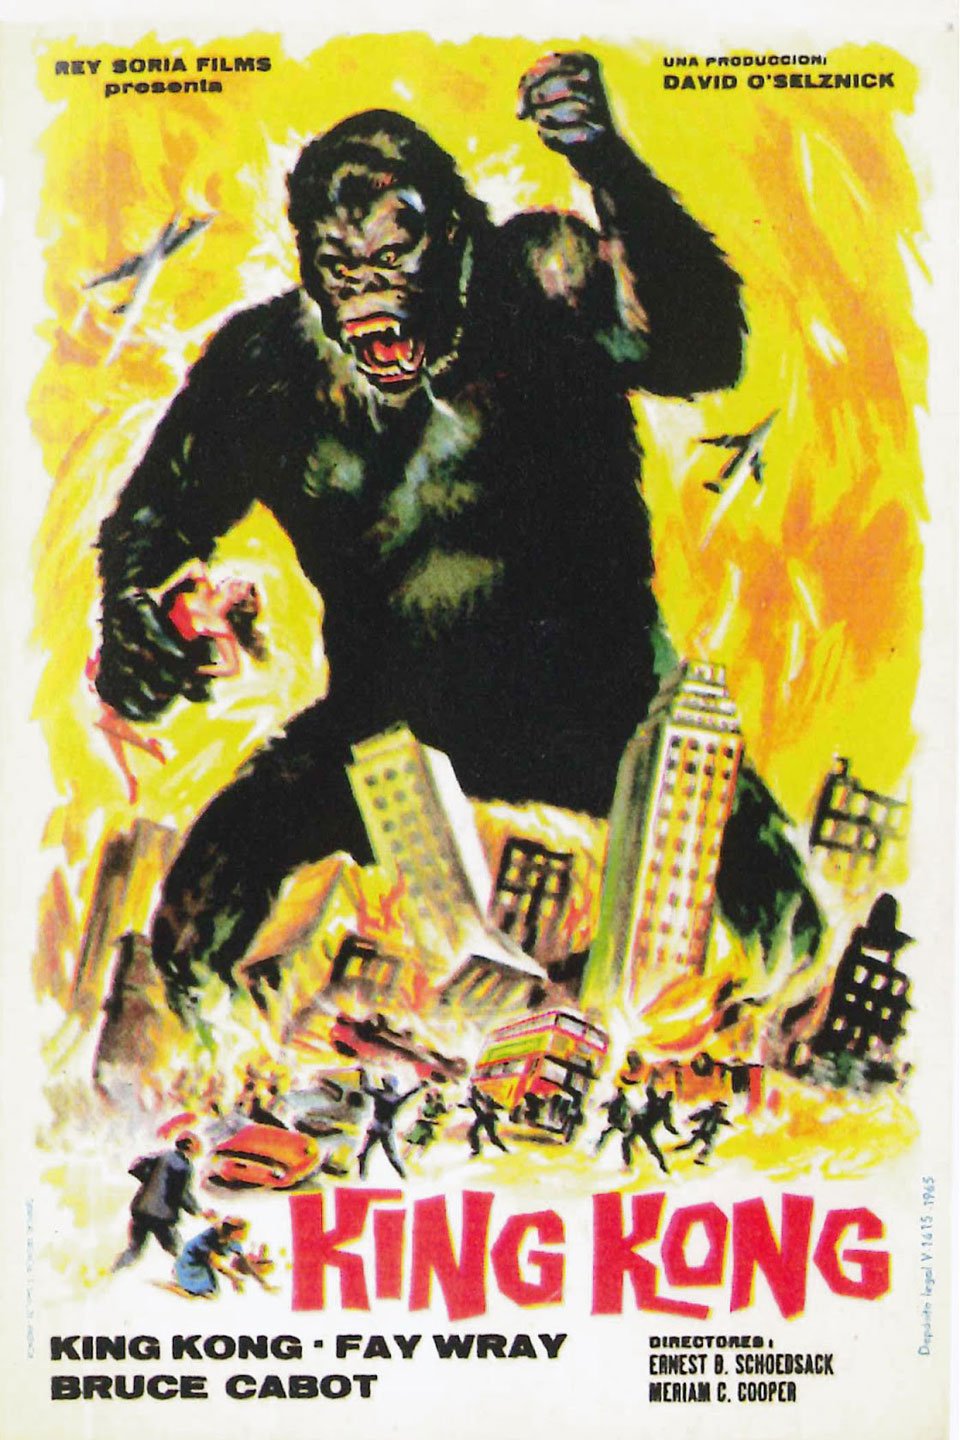 King Kong en DVD : King Kong - HD DVD - AlloCiné